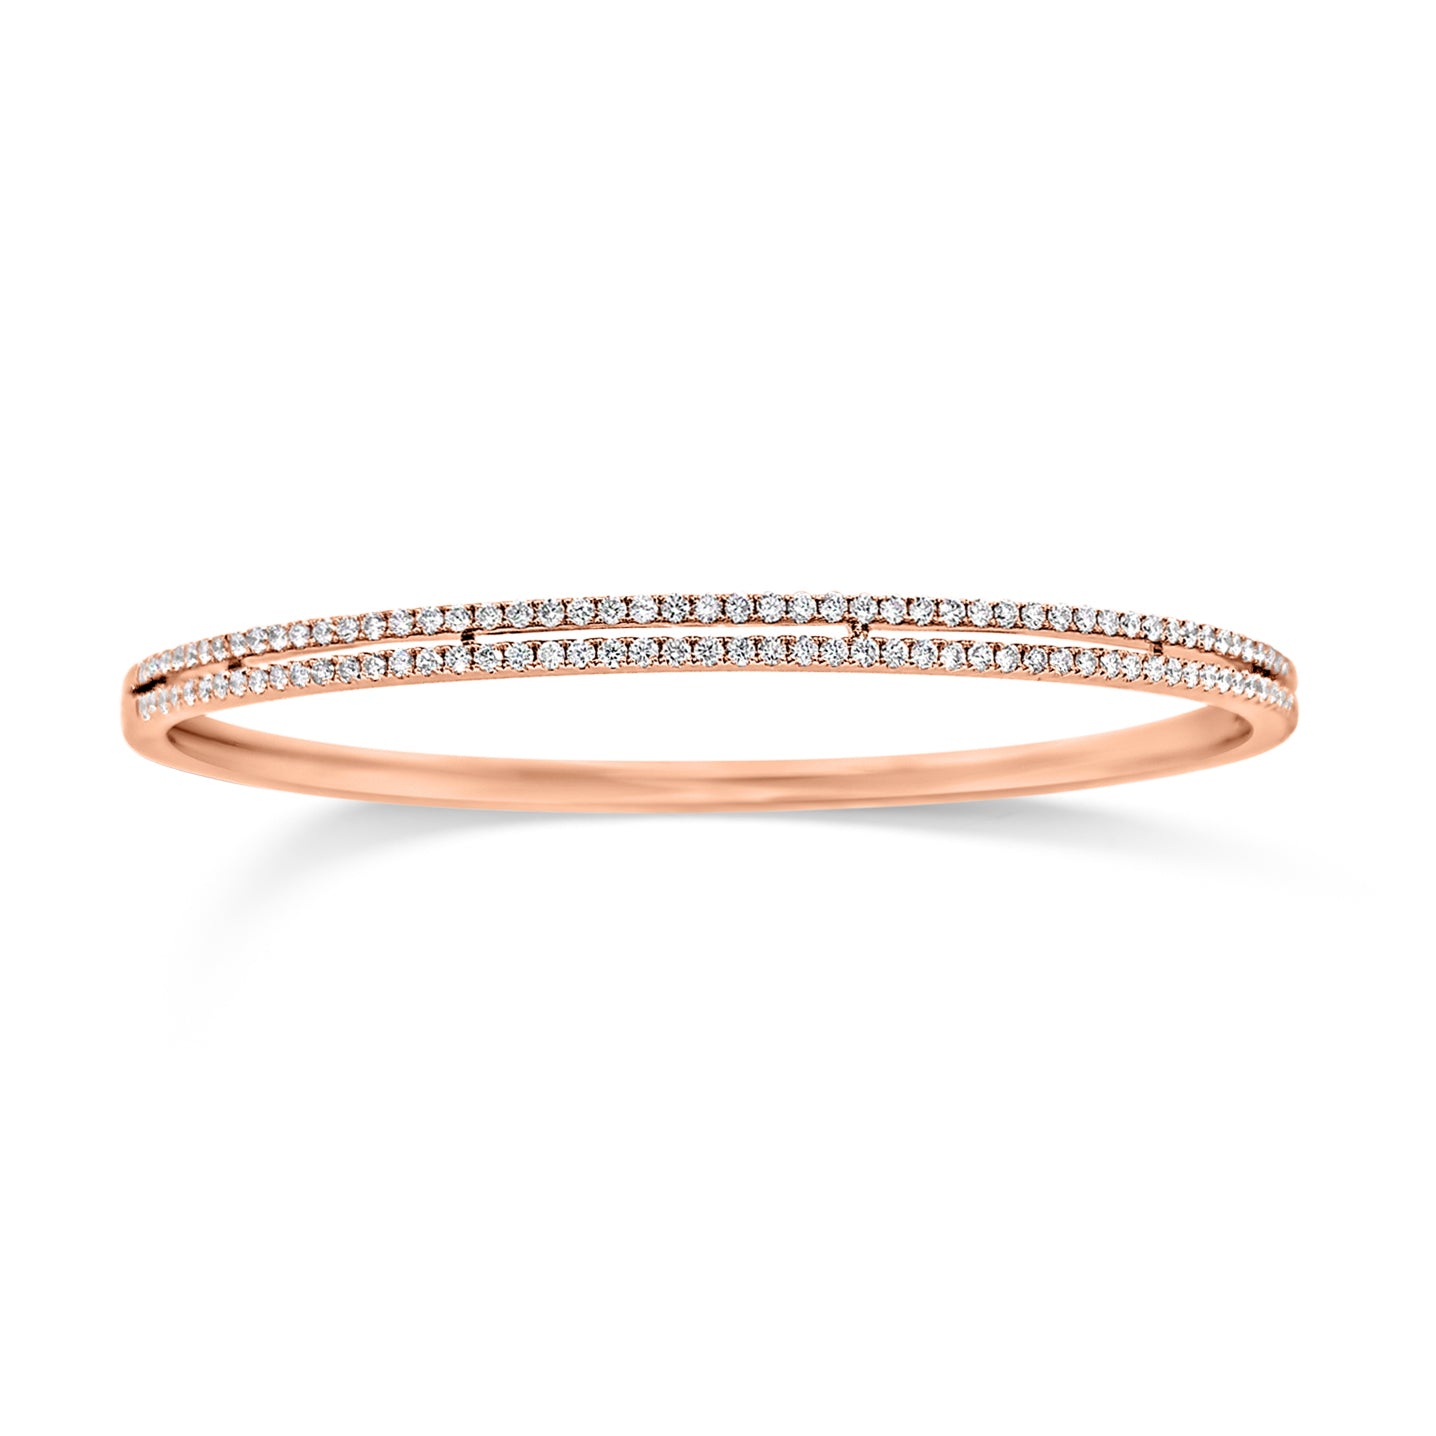 Diamond Double Row Bangle Bracelet - 18K rose gold weighting 11.70 grams. - 118 Round Diamonds totaling 0.96 carats.